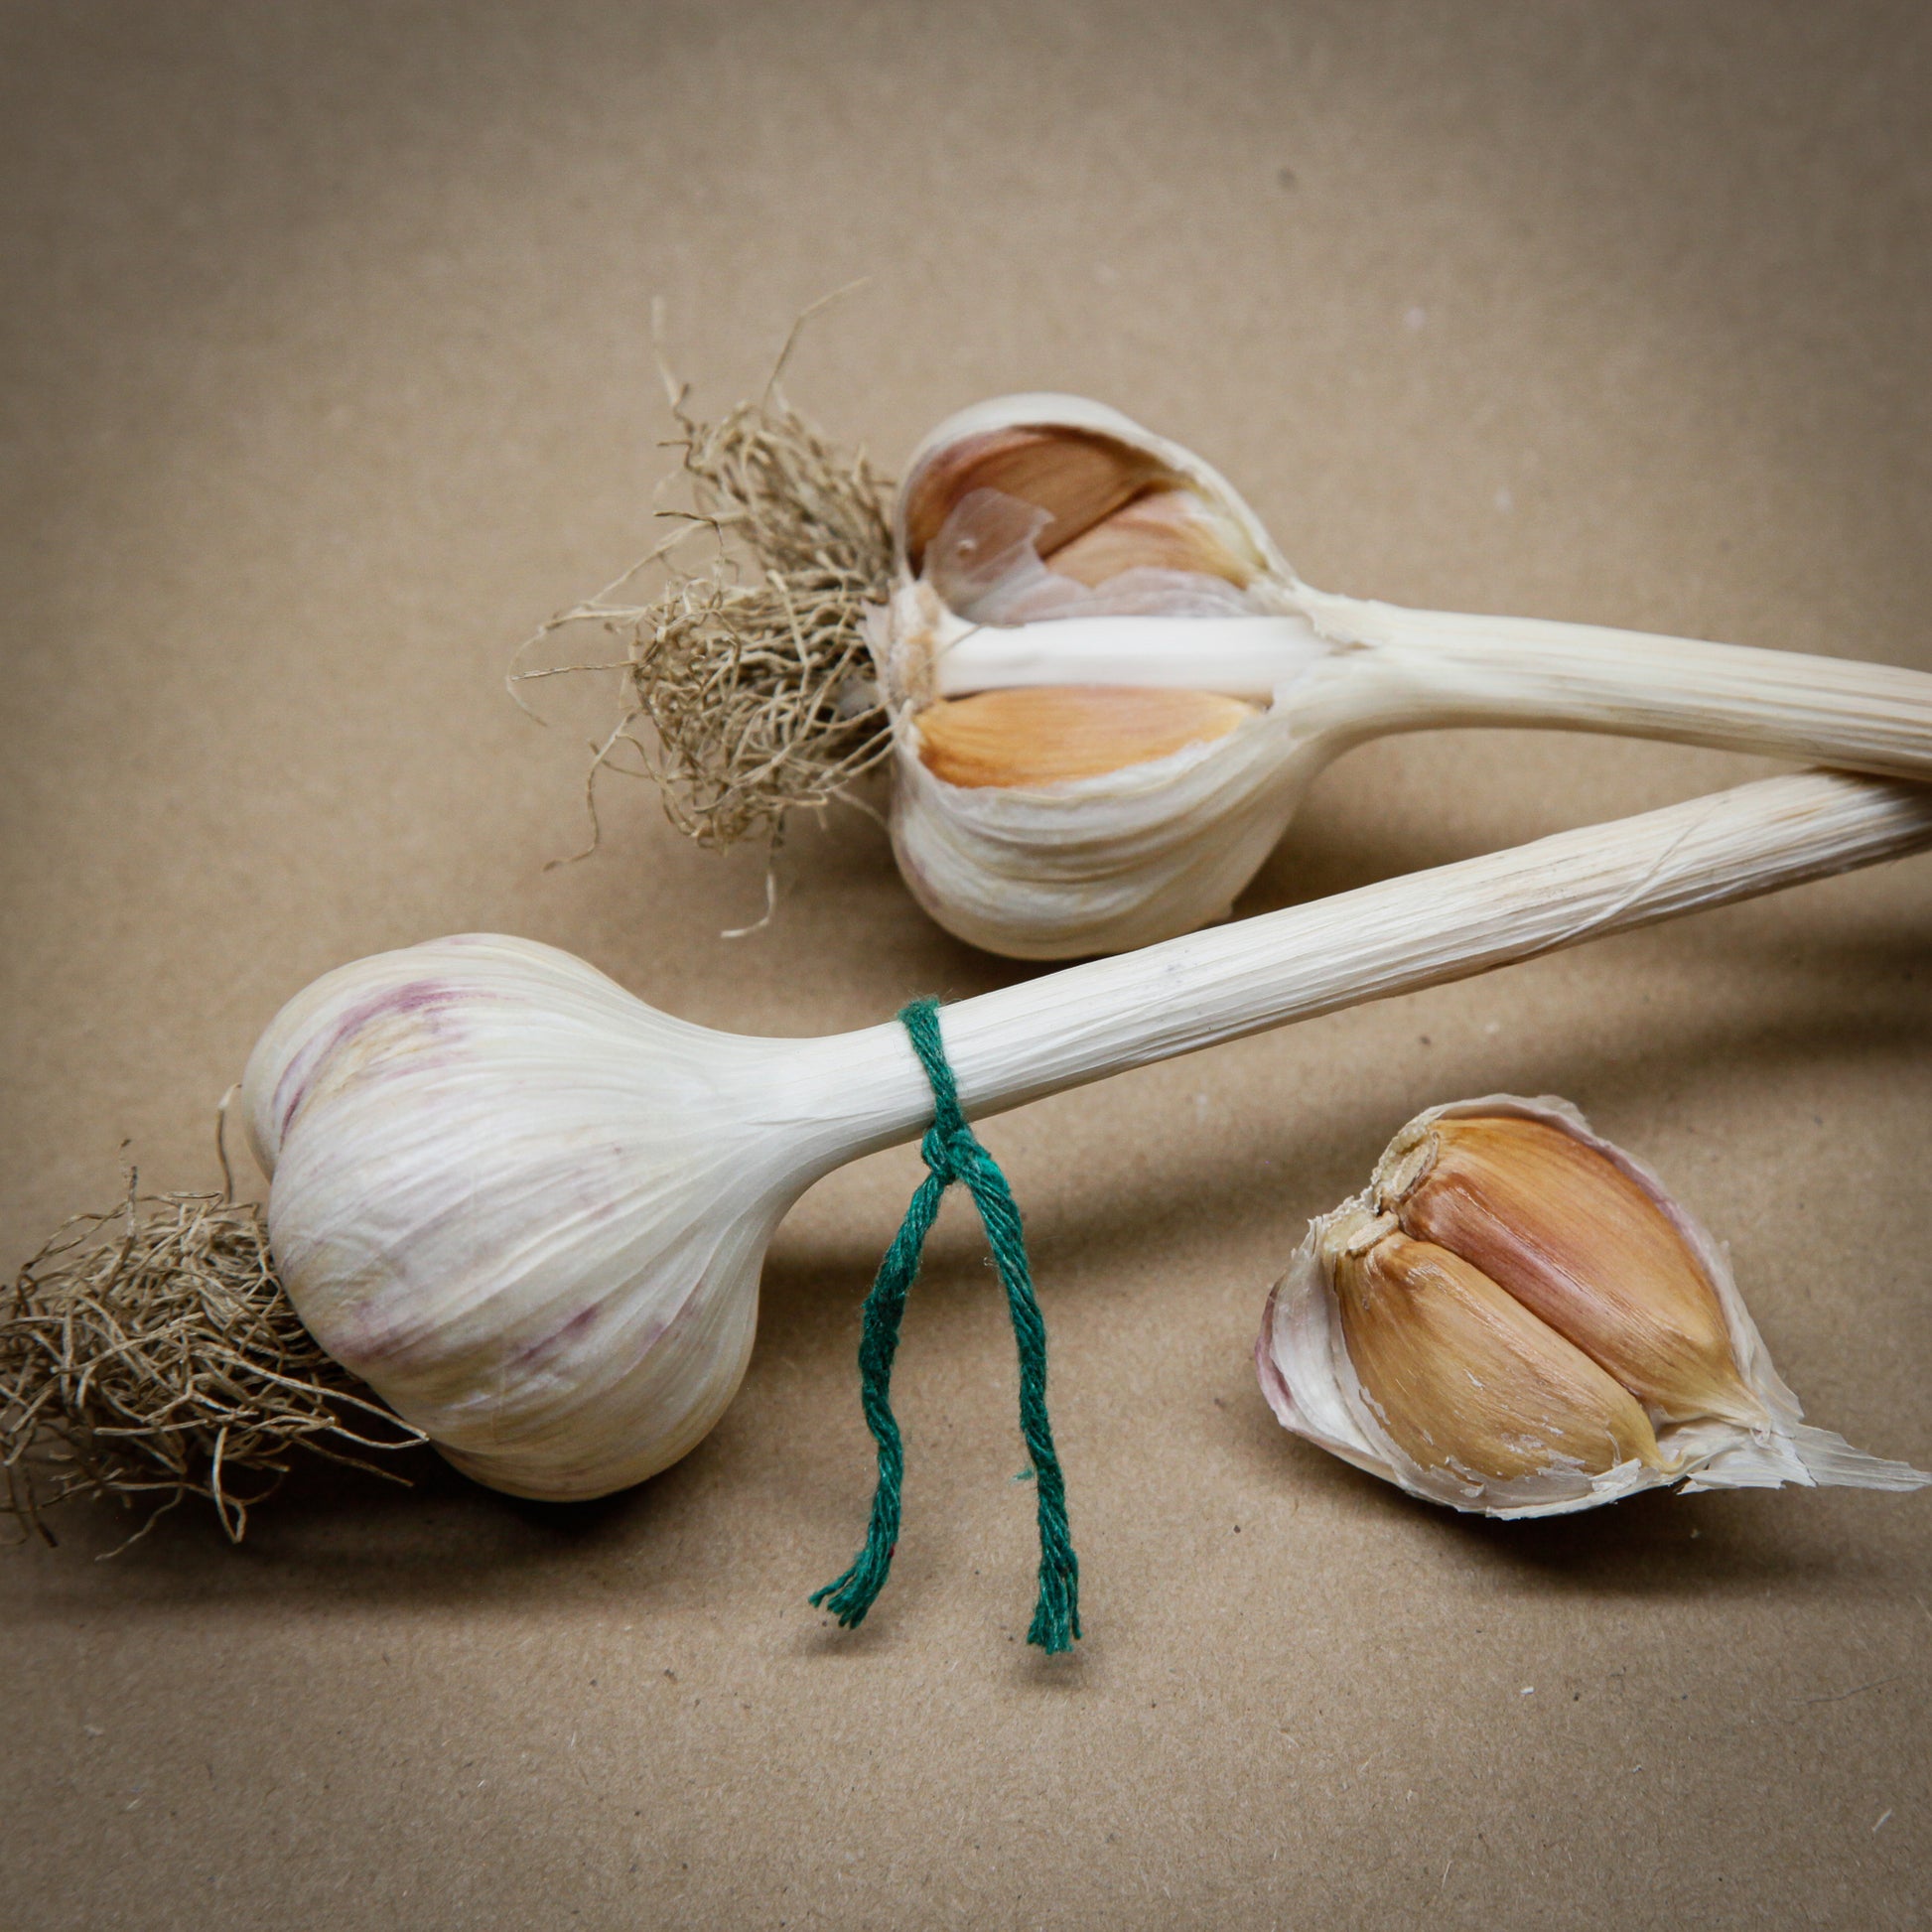 Ontario Giant, Puslinch, Rocambole, garlic with dark green strings, grown in Ontario by Garlicloves